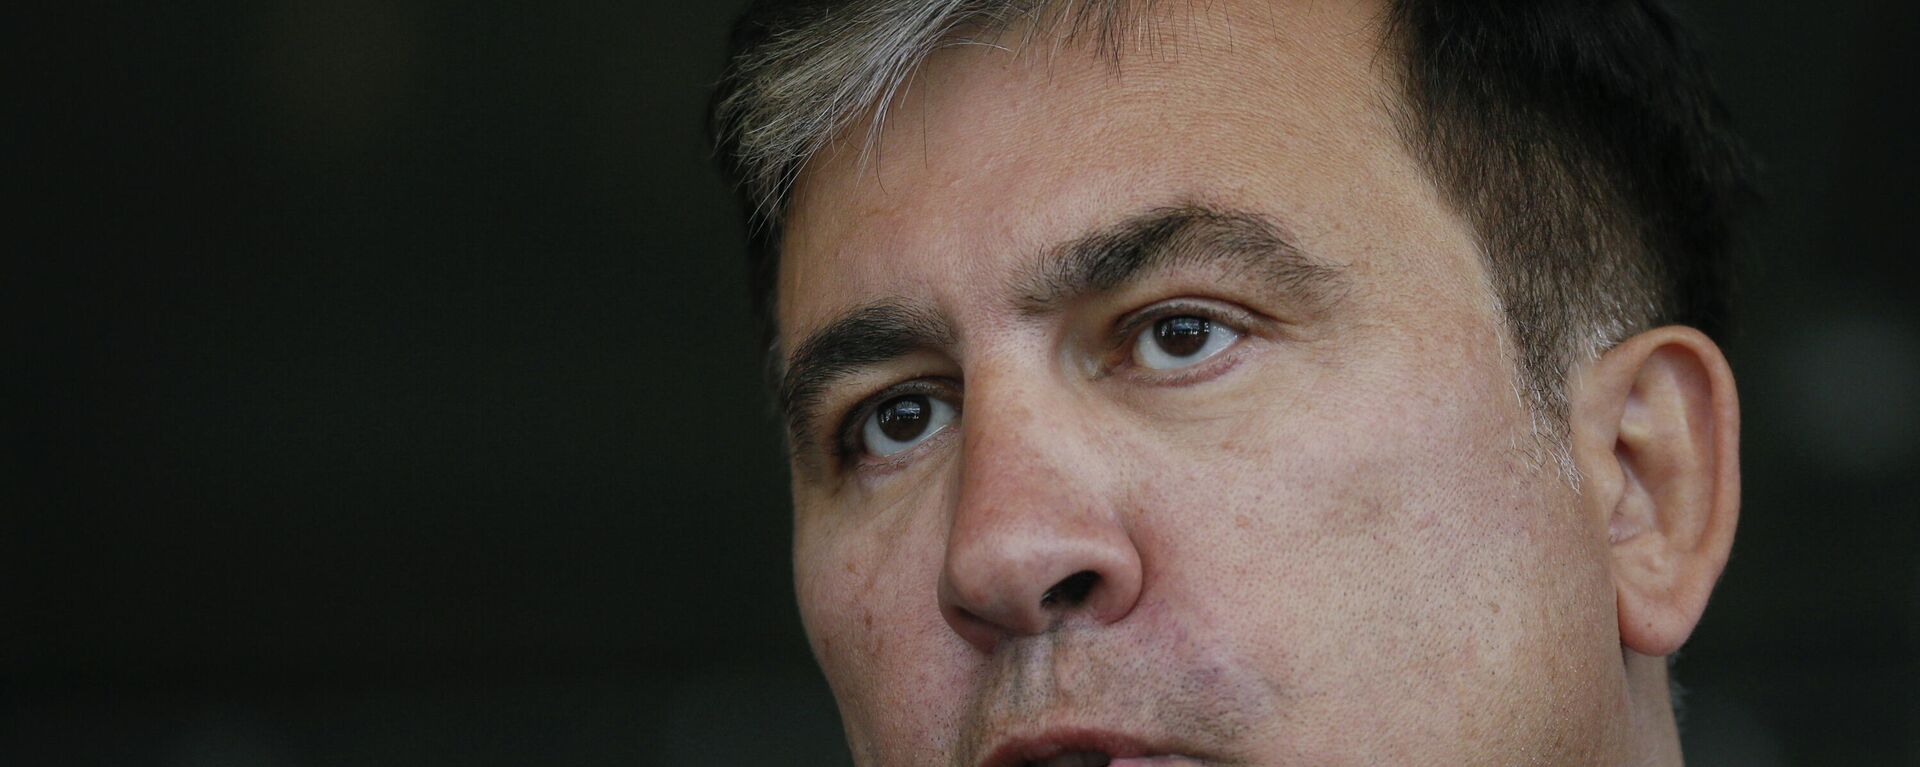 Mijal Saakashvili,  expresidente georgiano  - Sputnik Mundo, 1920, 05.10.2021